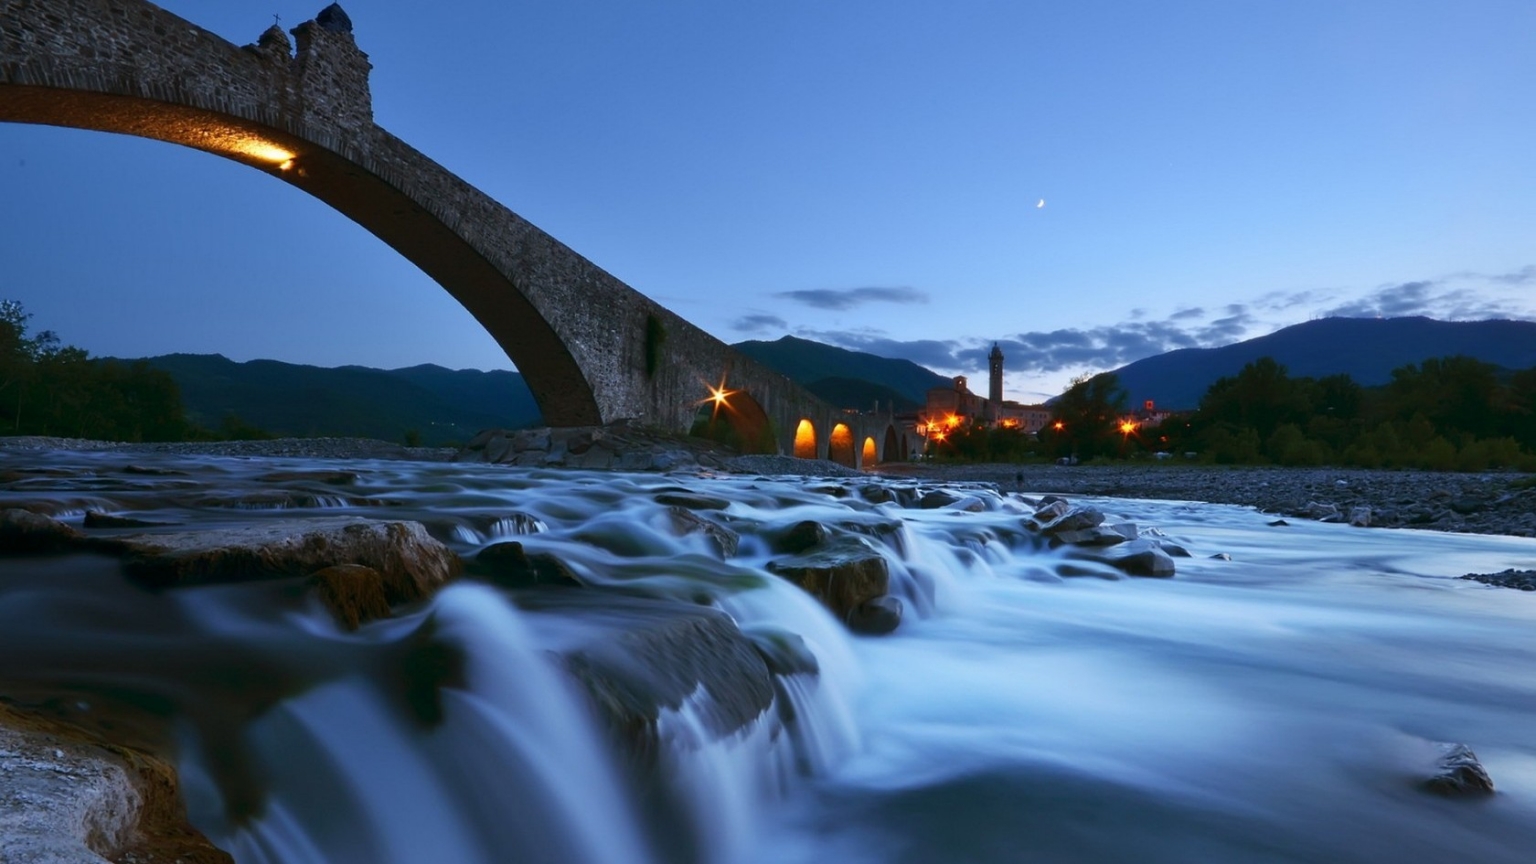 Ponte del Diavolo Night View for 1536 x 864 HDTV resolution